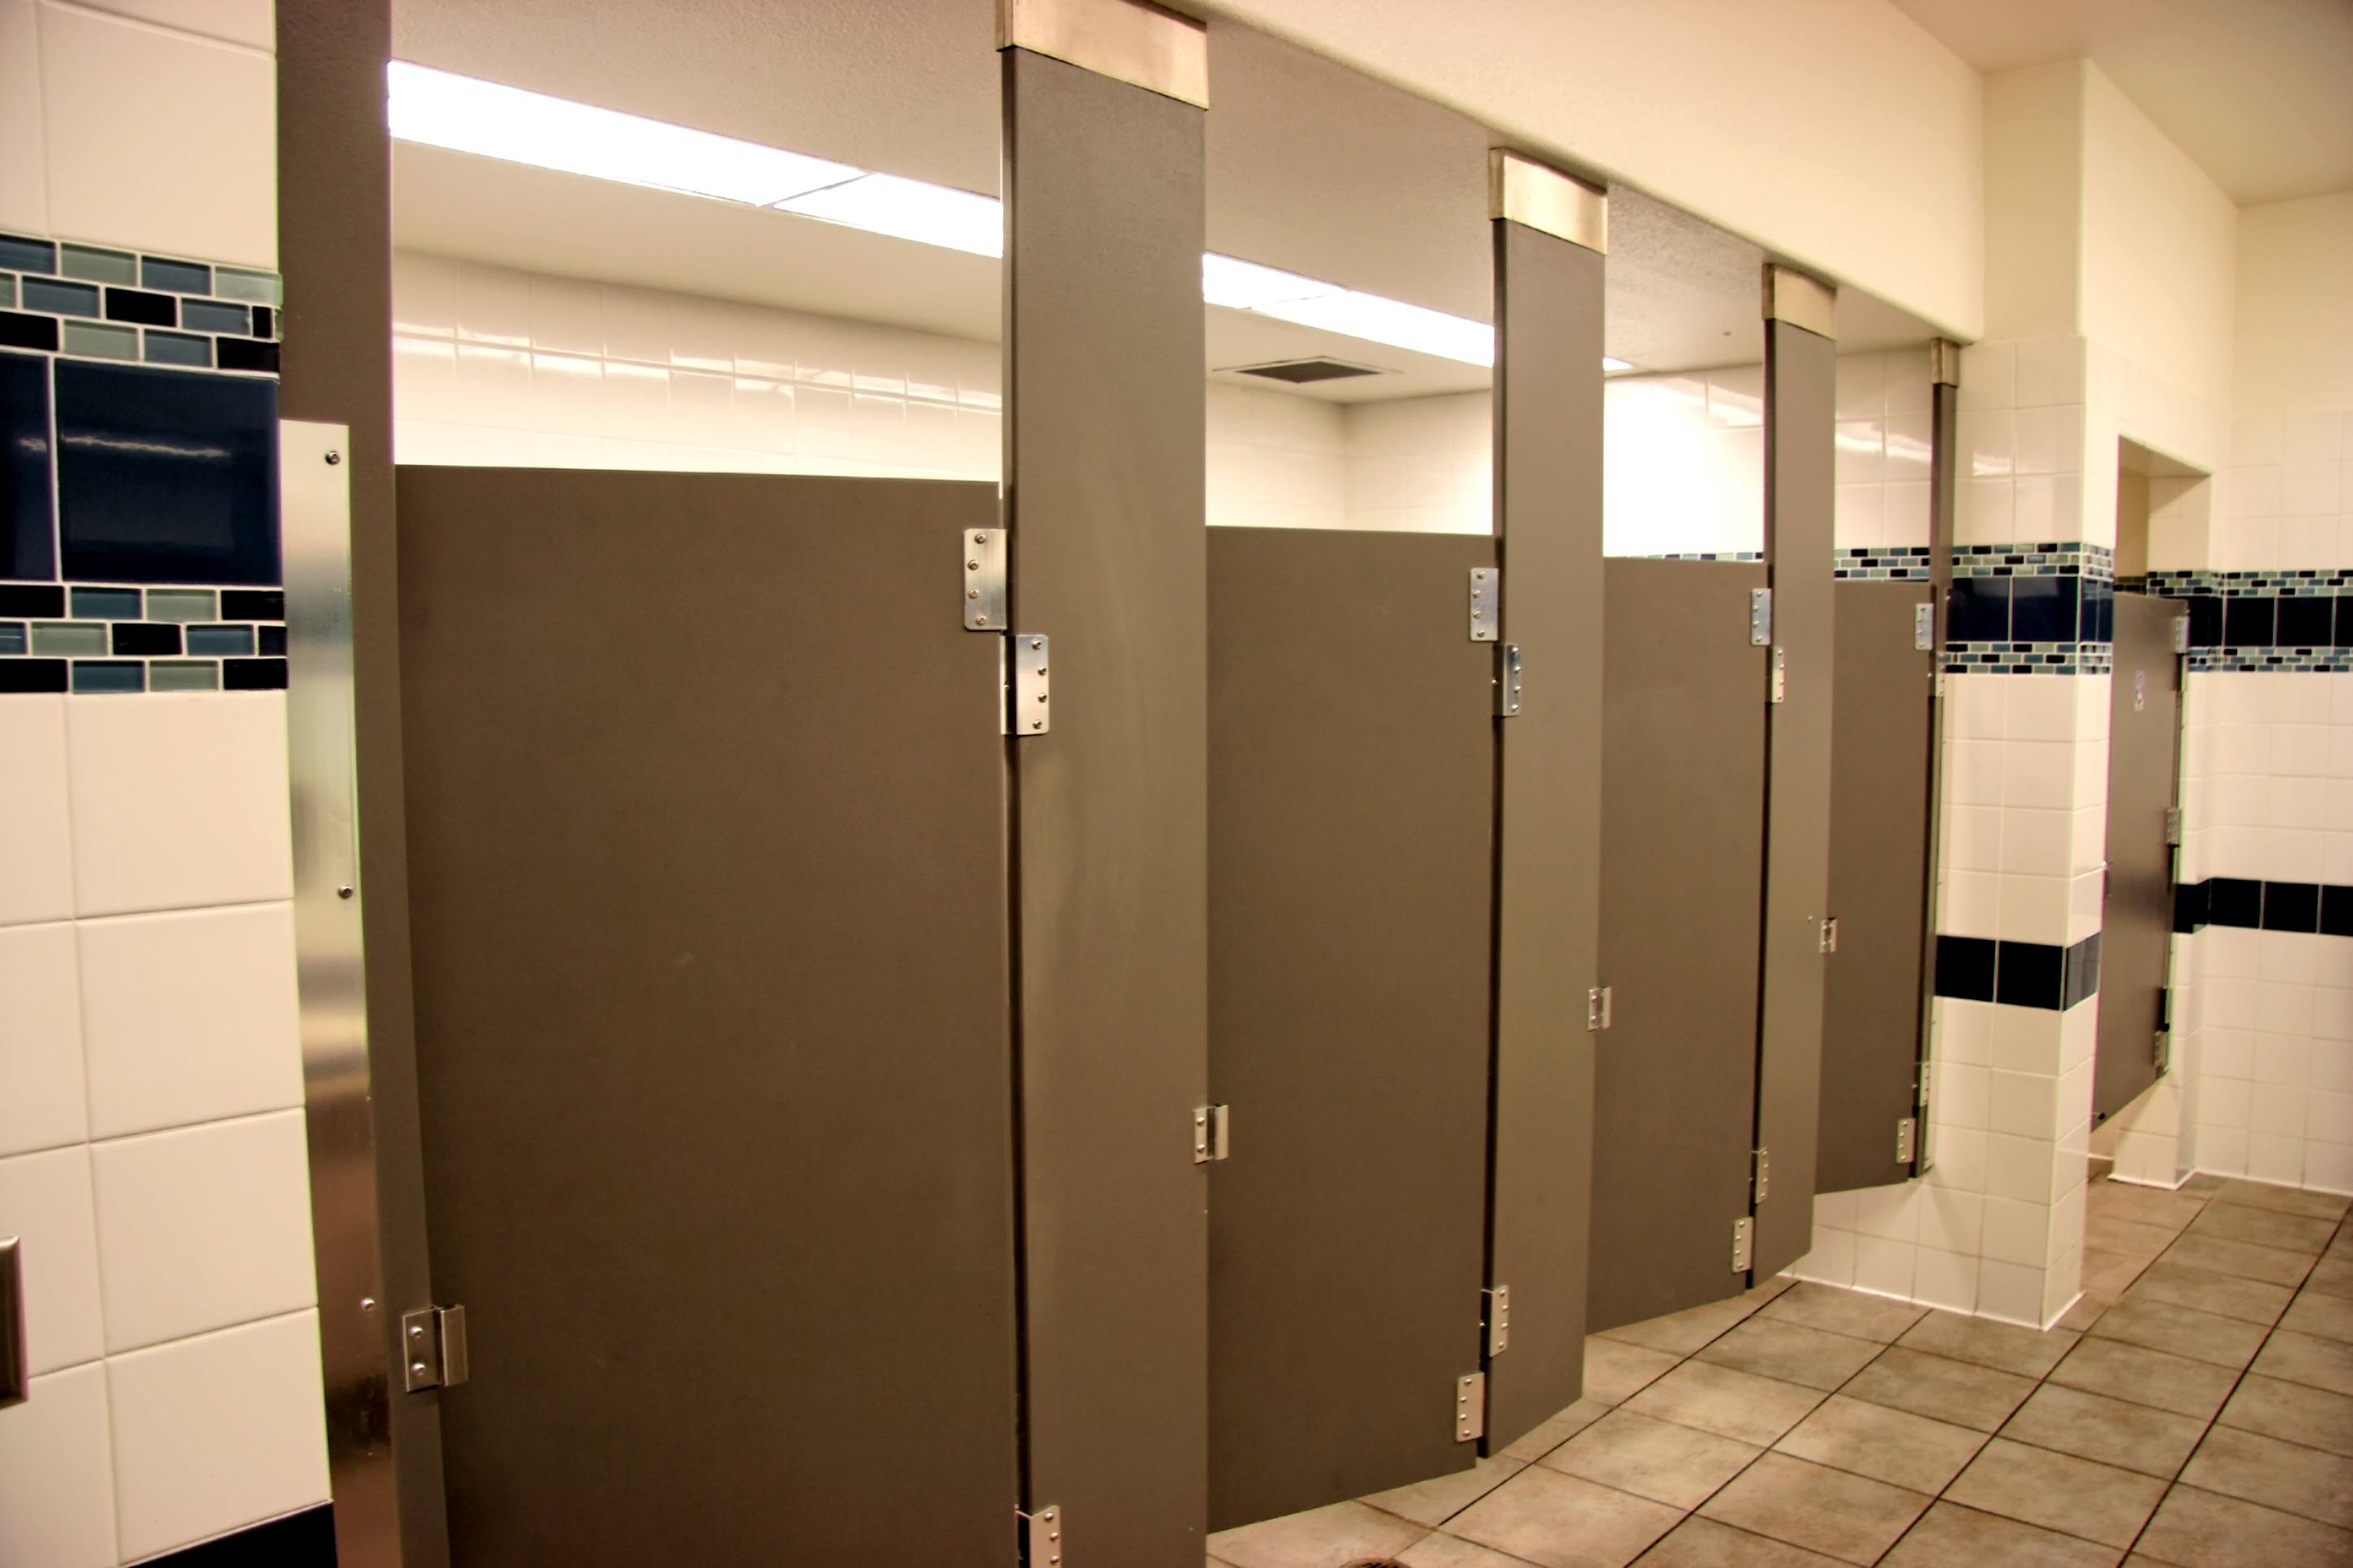 Empty Public Bathroom Stalls